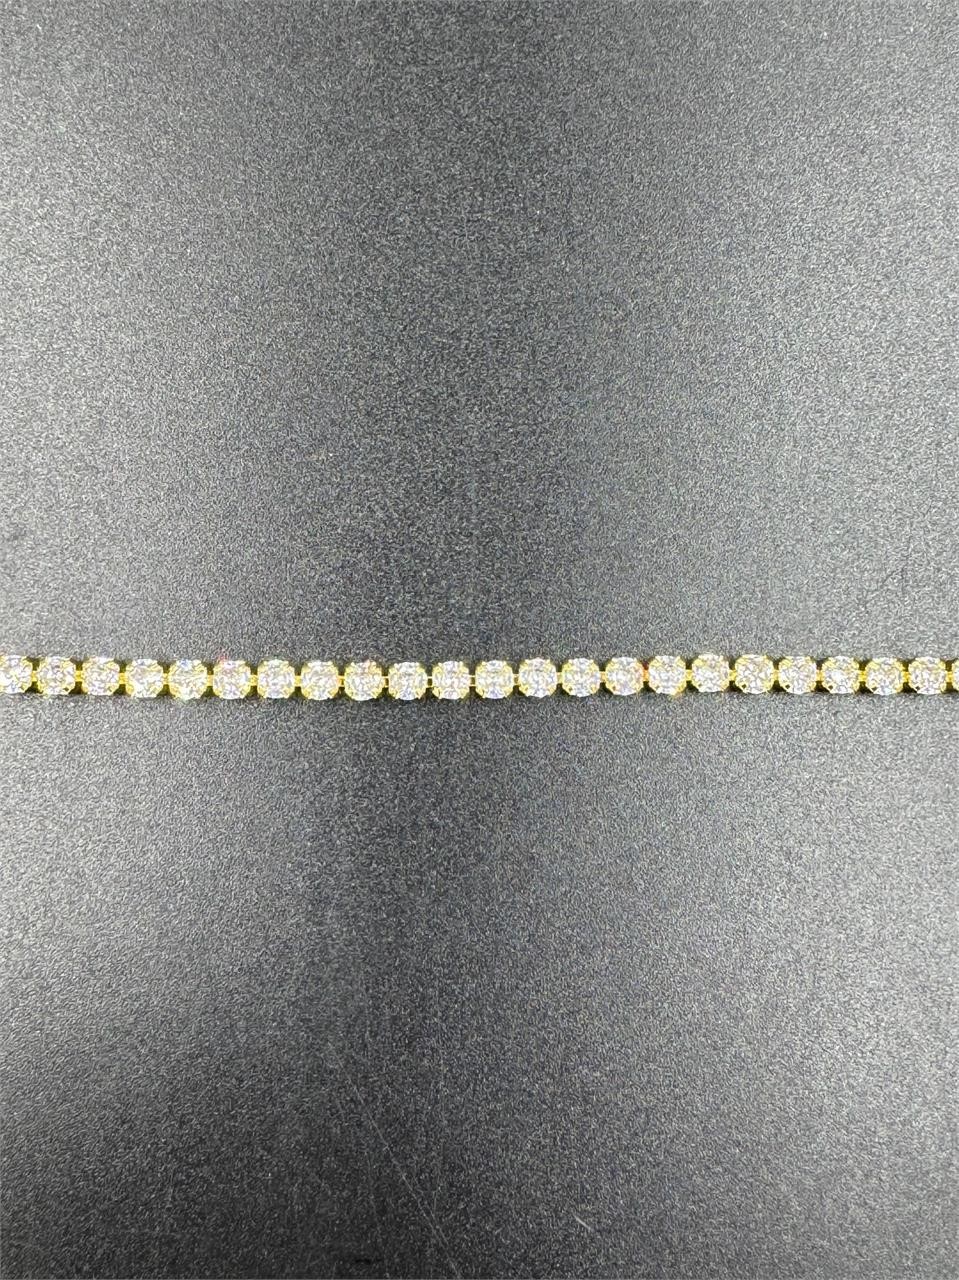 Yellow Gold White Sapphire Tennis Bracelet 7 In.